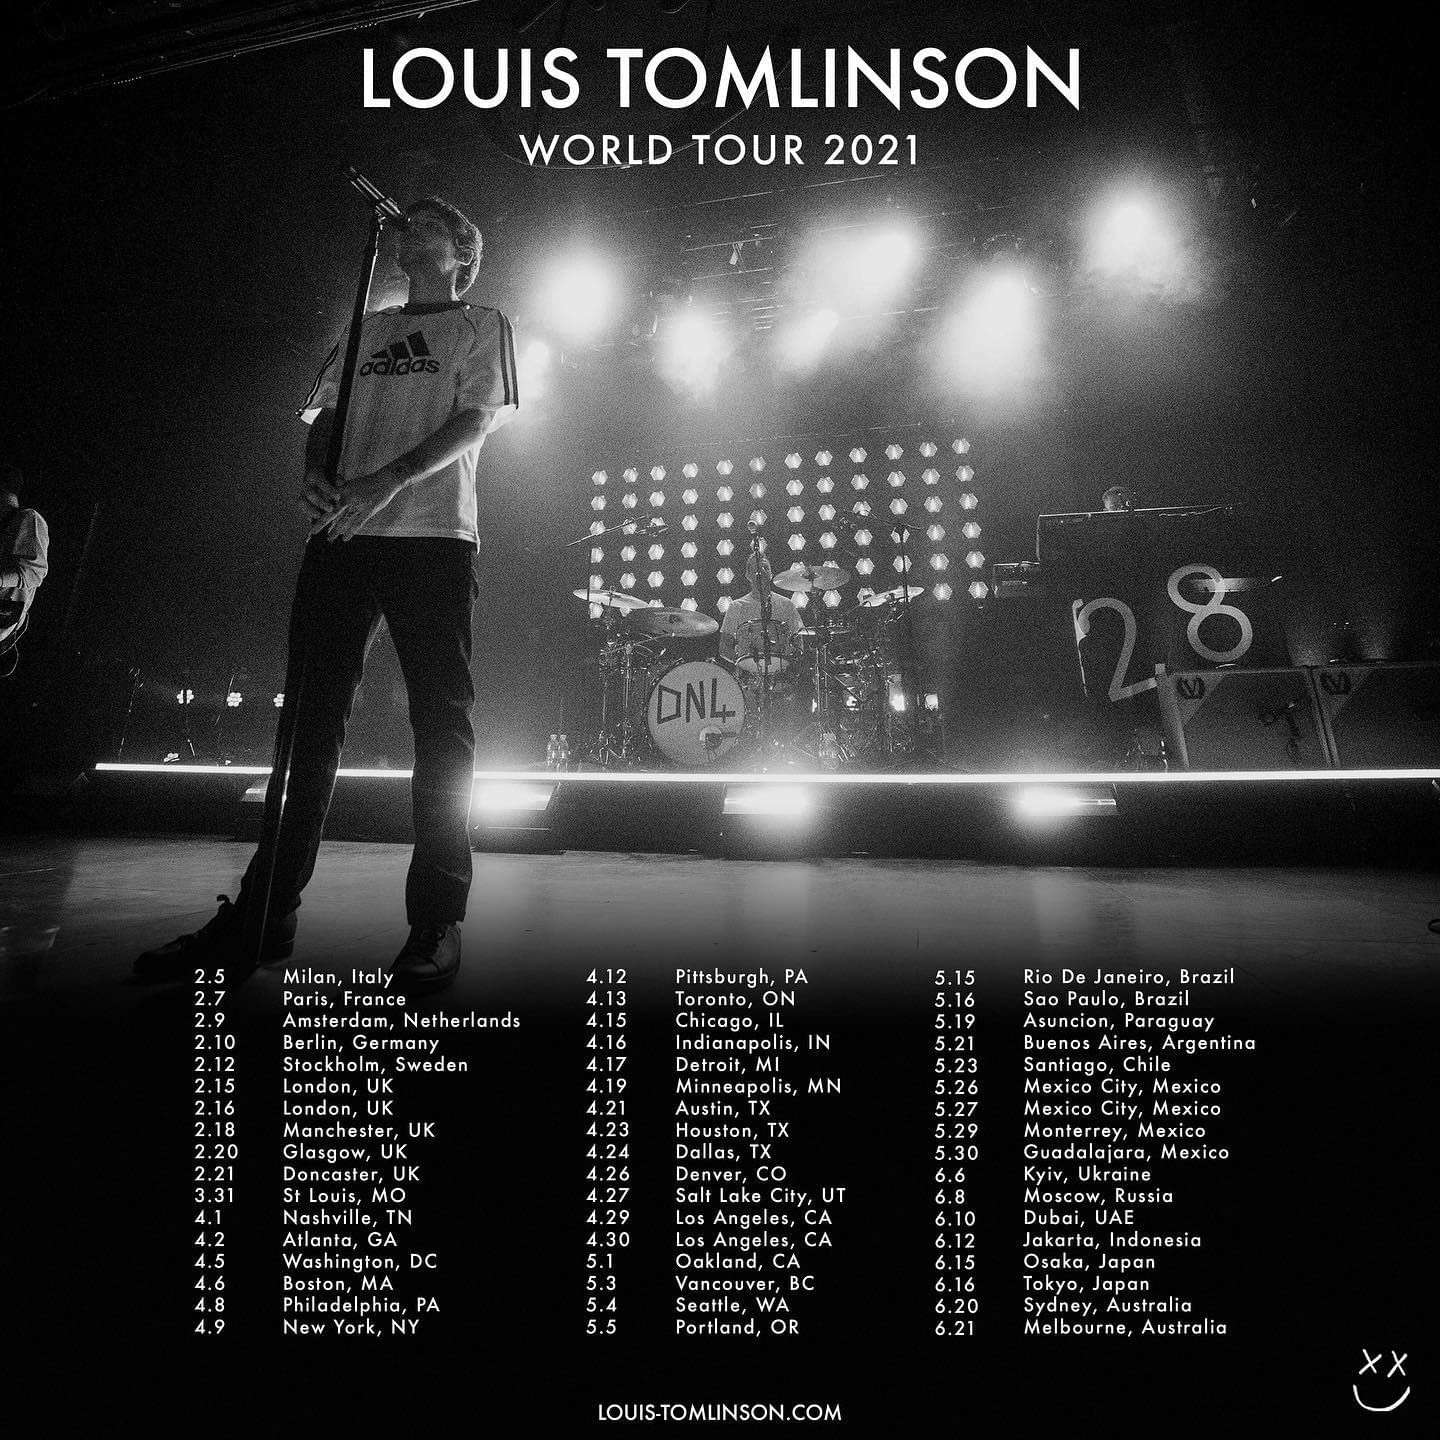 Poster for Louis Tomlinson world tour